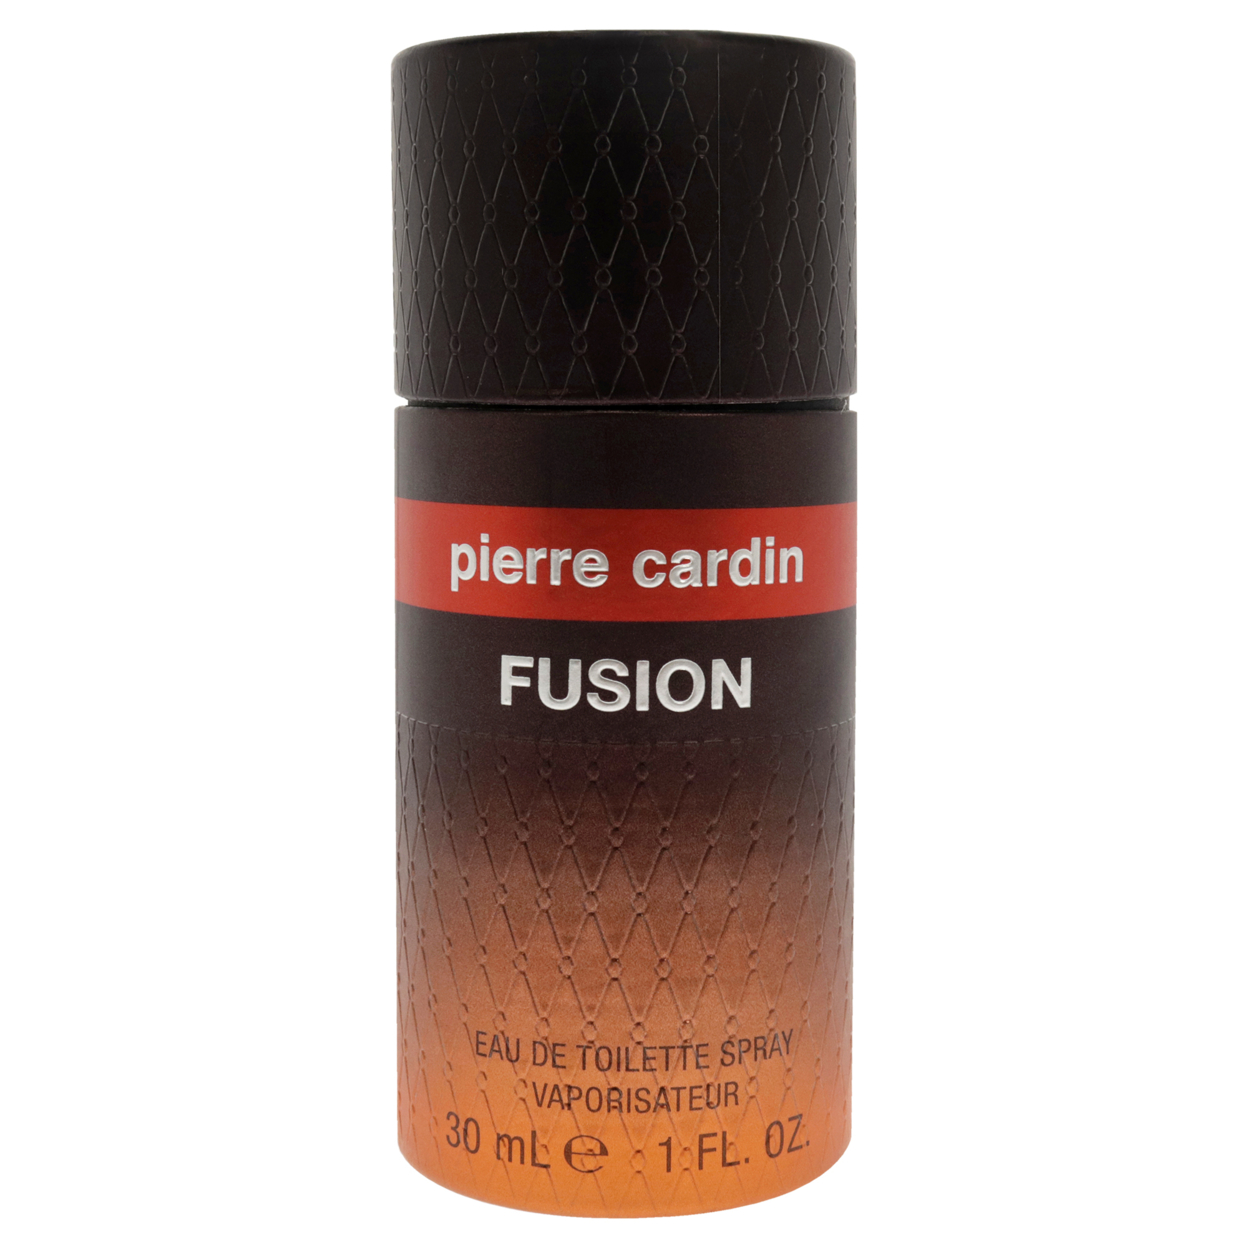 Pierre Cardin Fusion by Pierre Cardin Eau De Toilette Spray 1 oz for Men - image 3 of 4